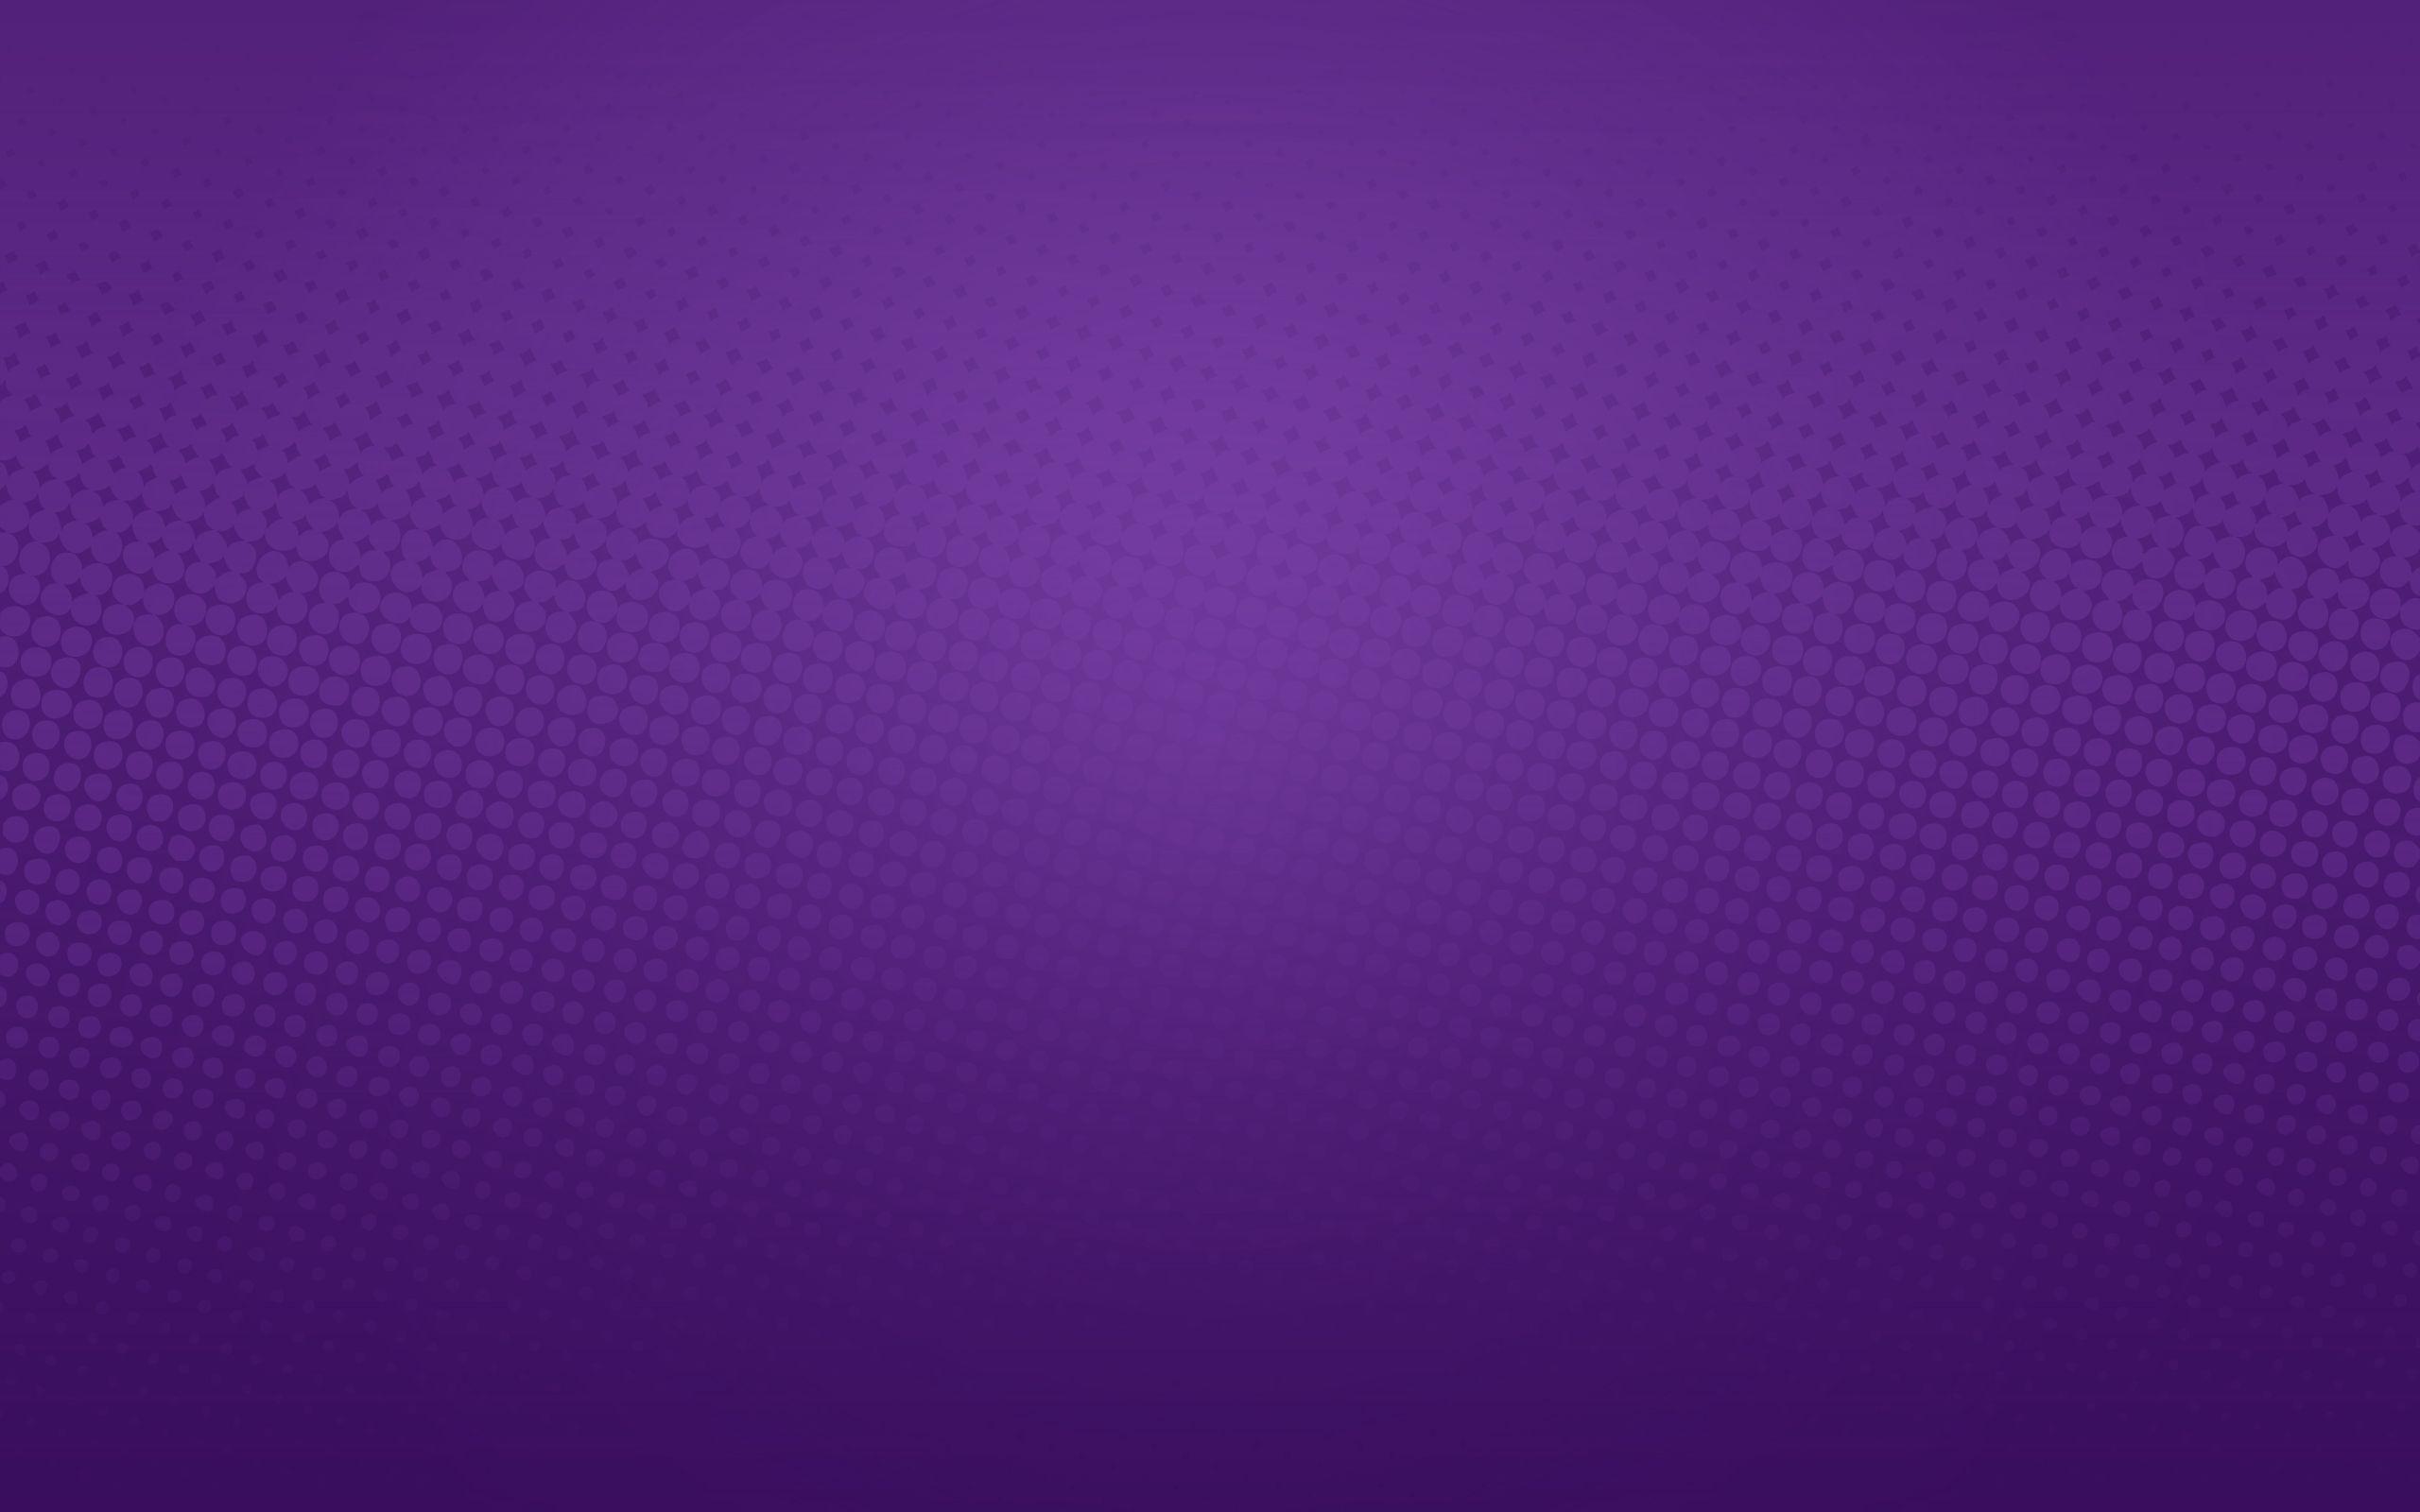 Simple Ubuntu Wallpaper 40665 2560x1920 px